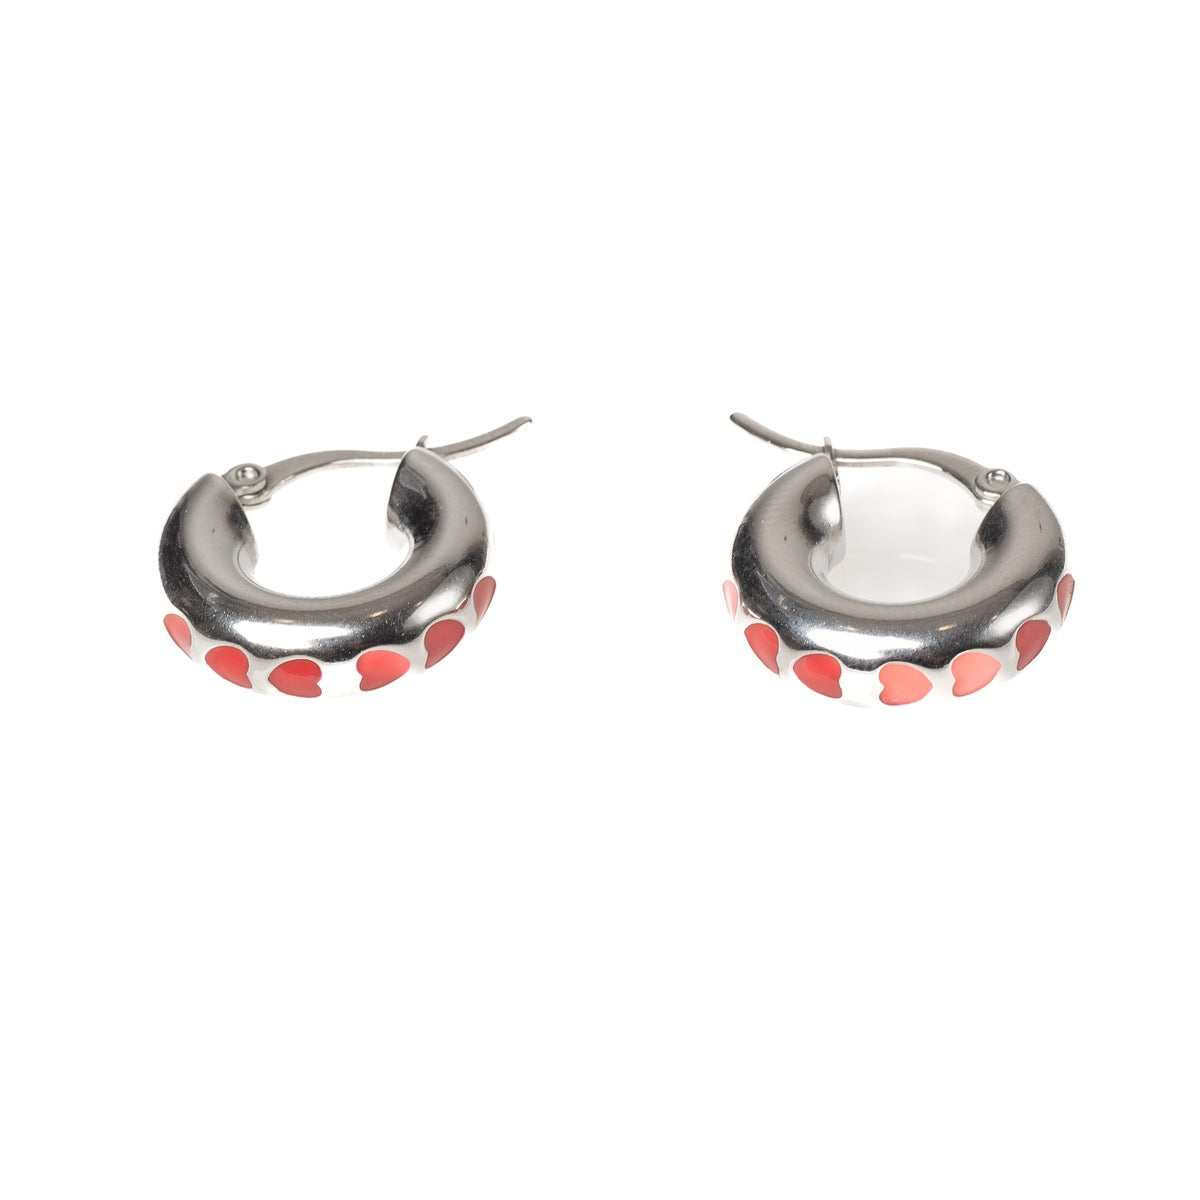 A-MORE Color Hoops - Earrings